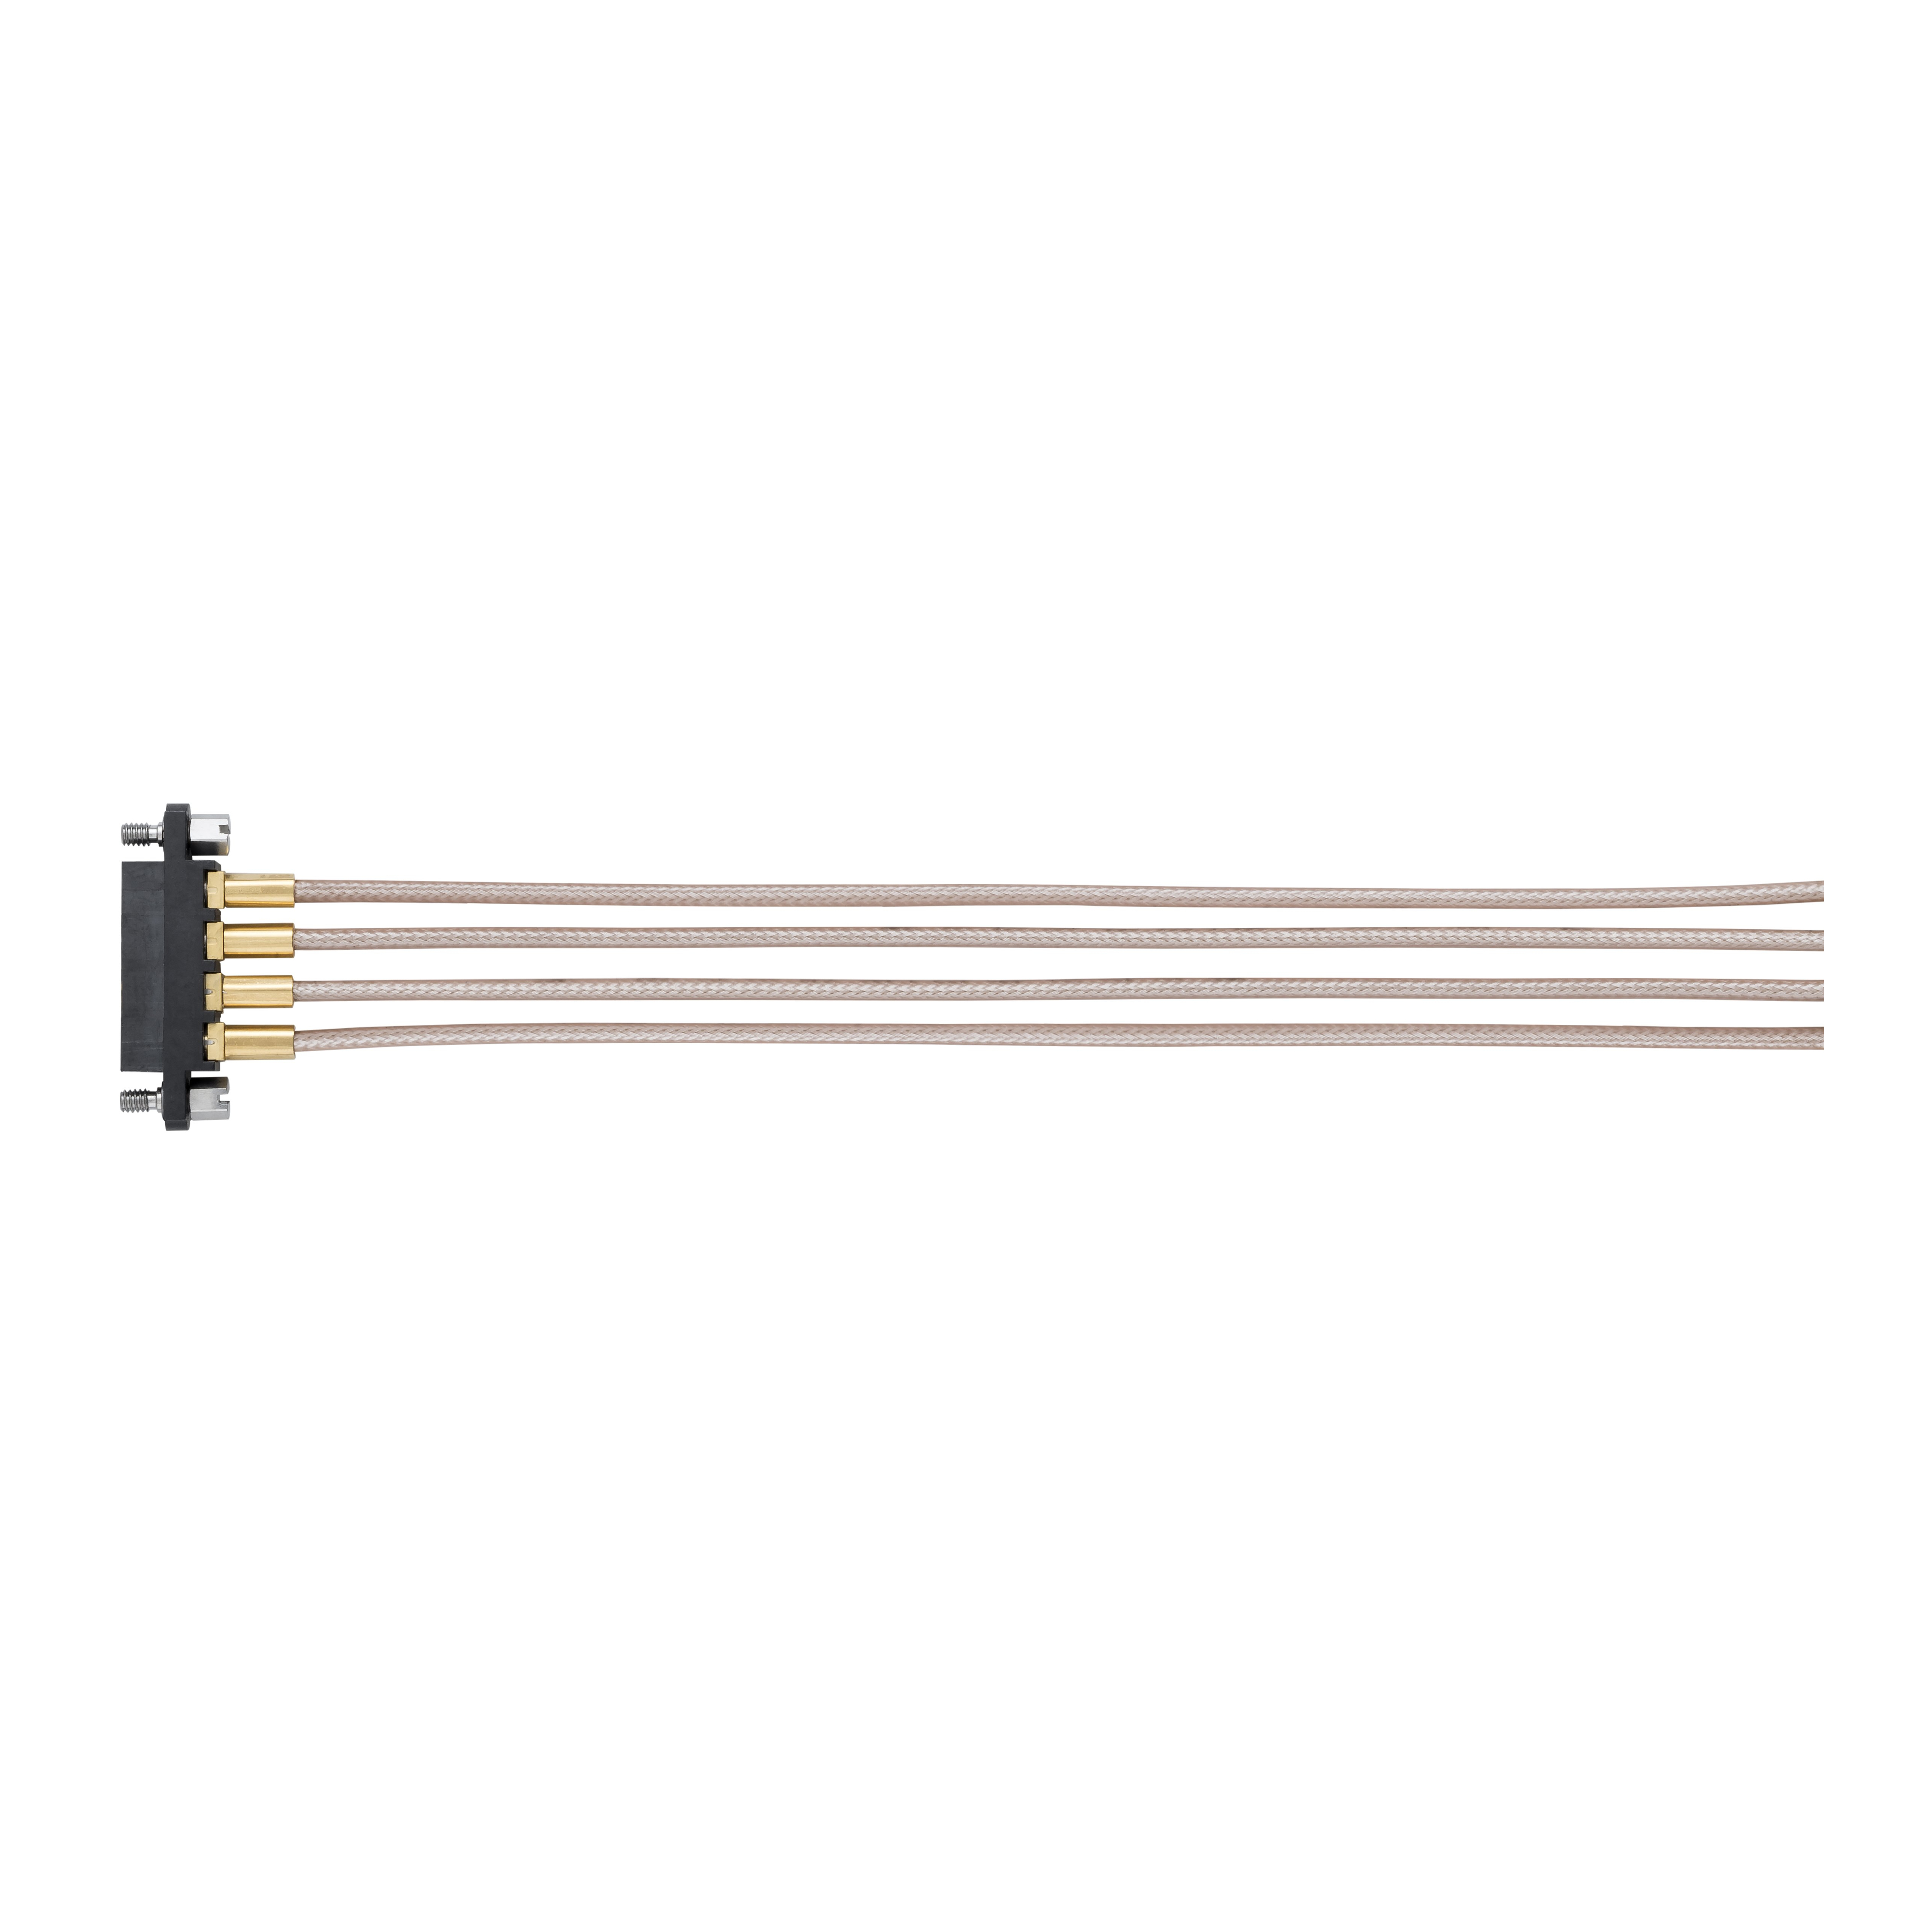 M80-FC105-04-0450L - 4 Pos. Female SIL RG178 Cable Assembly, 450mm, single-end, Jackscrews